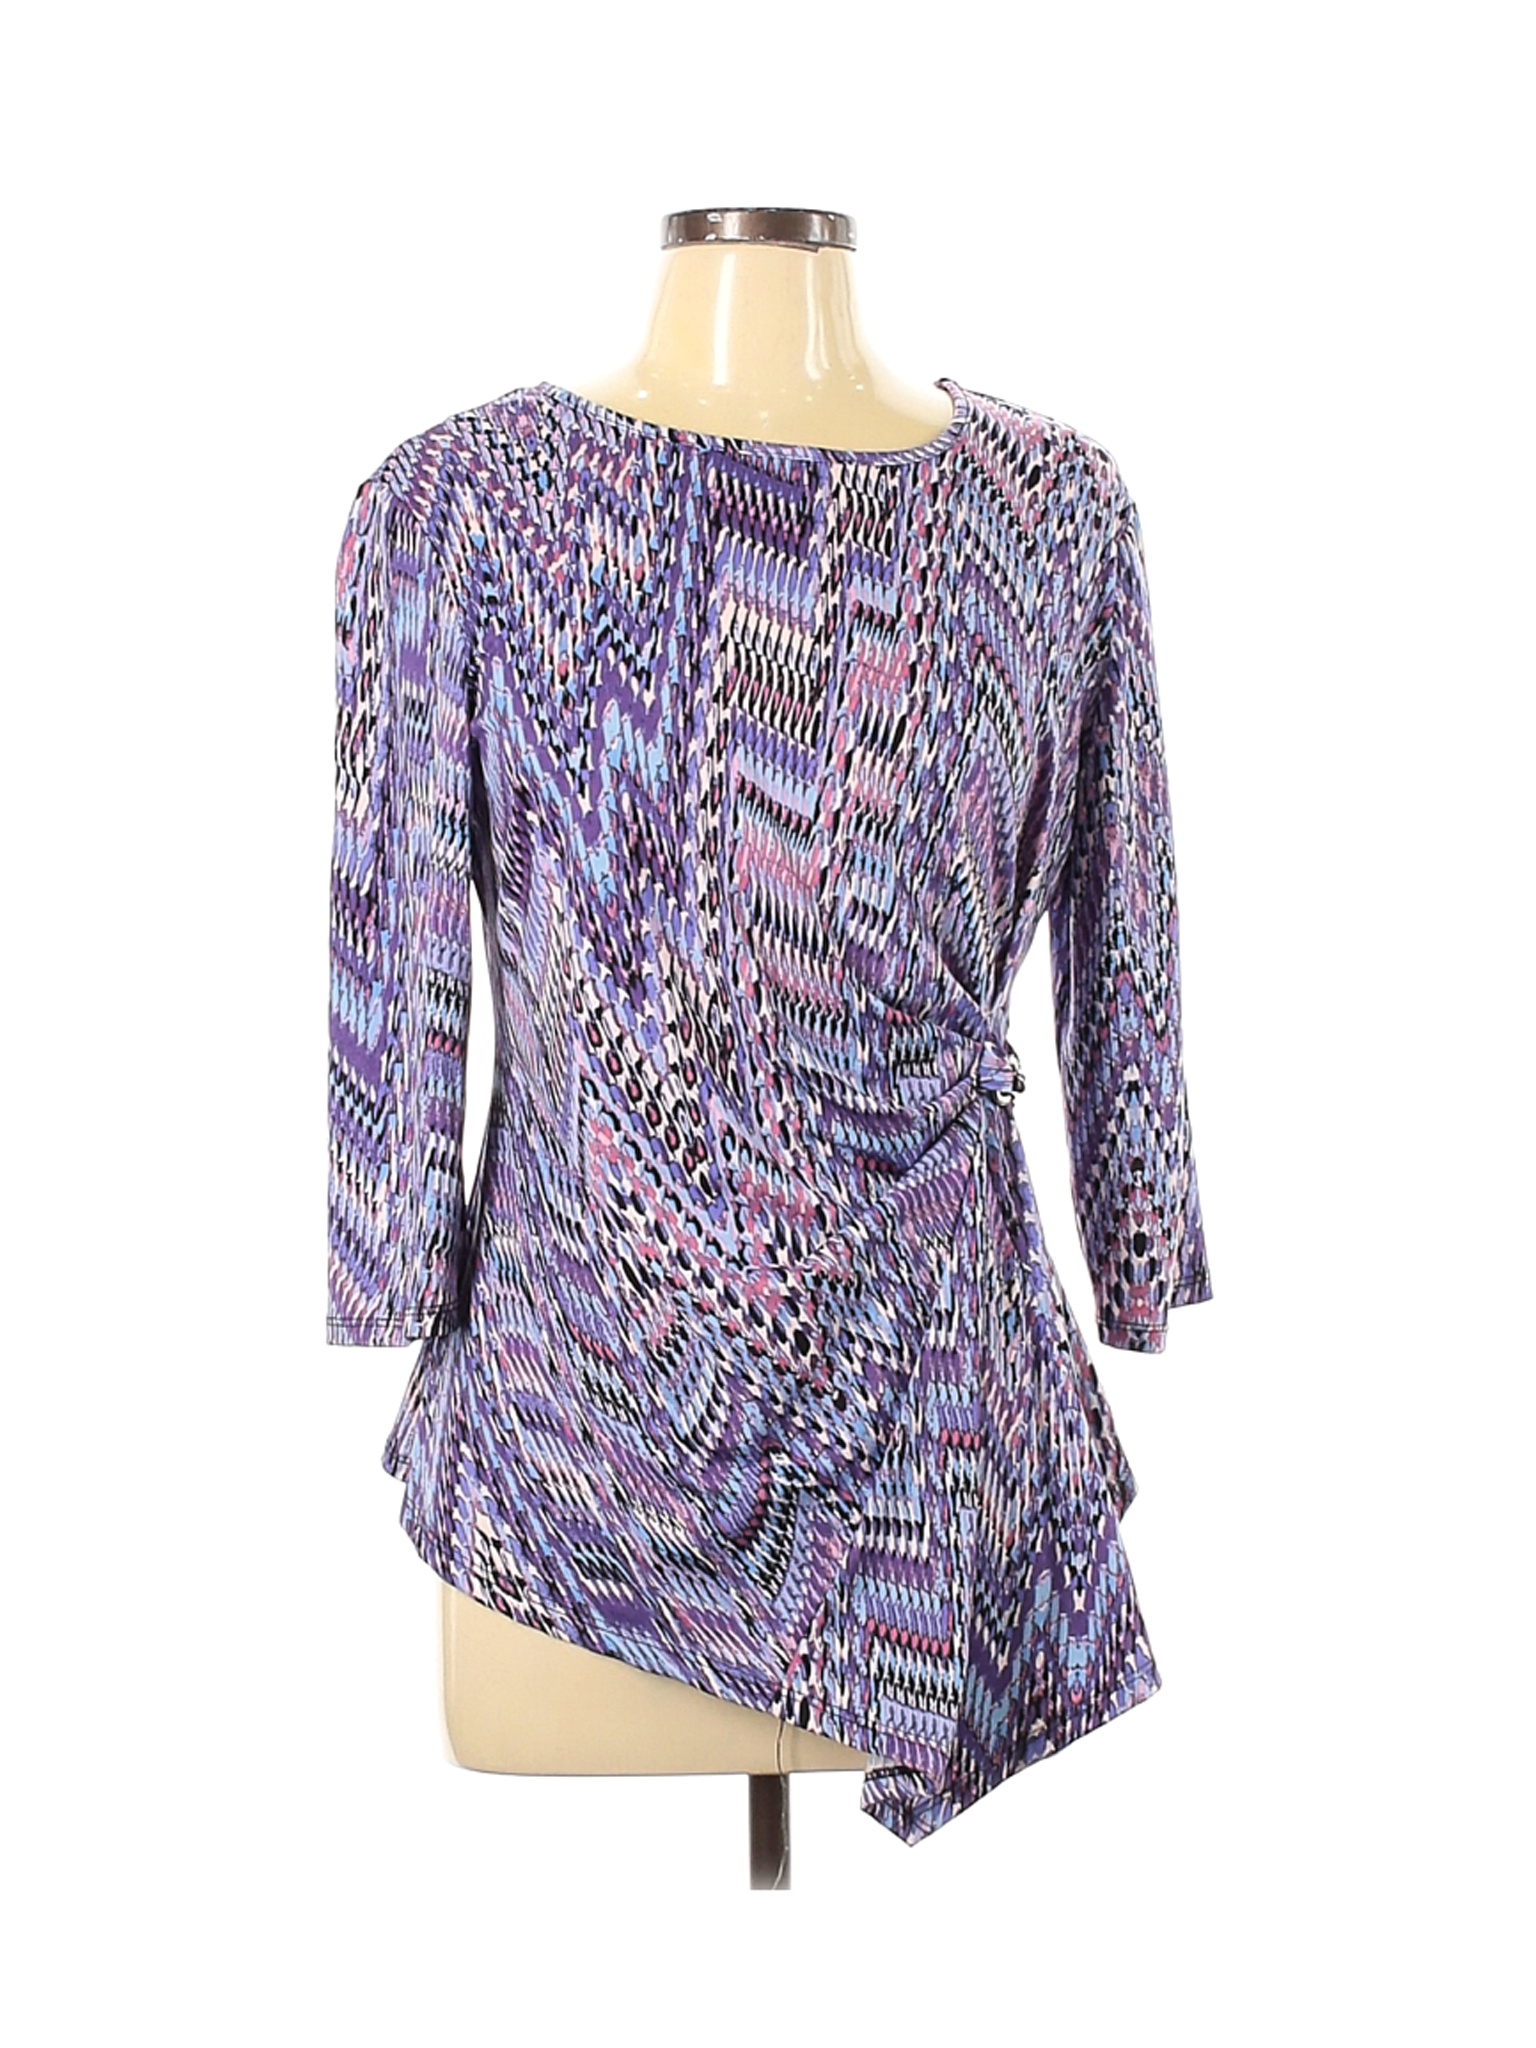 Mandy Evans Women Purple 3/4 Sleeve Top L | eBay